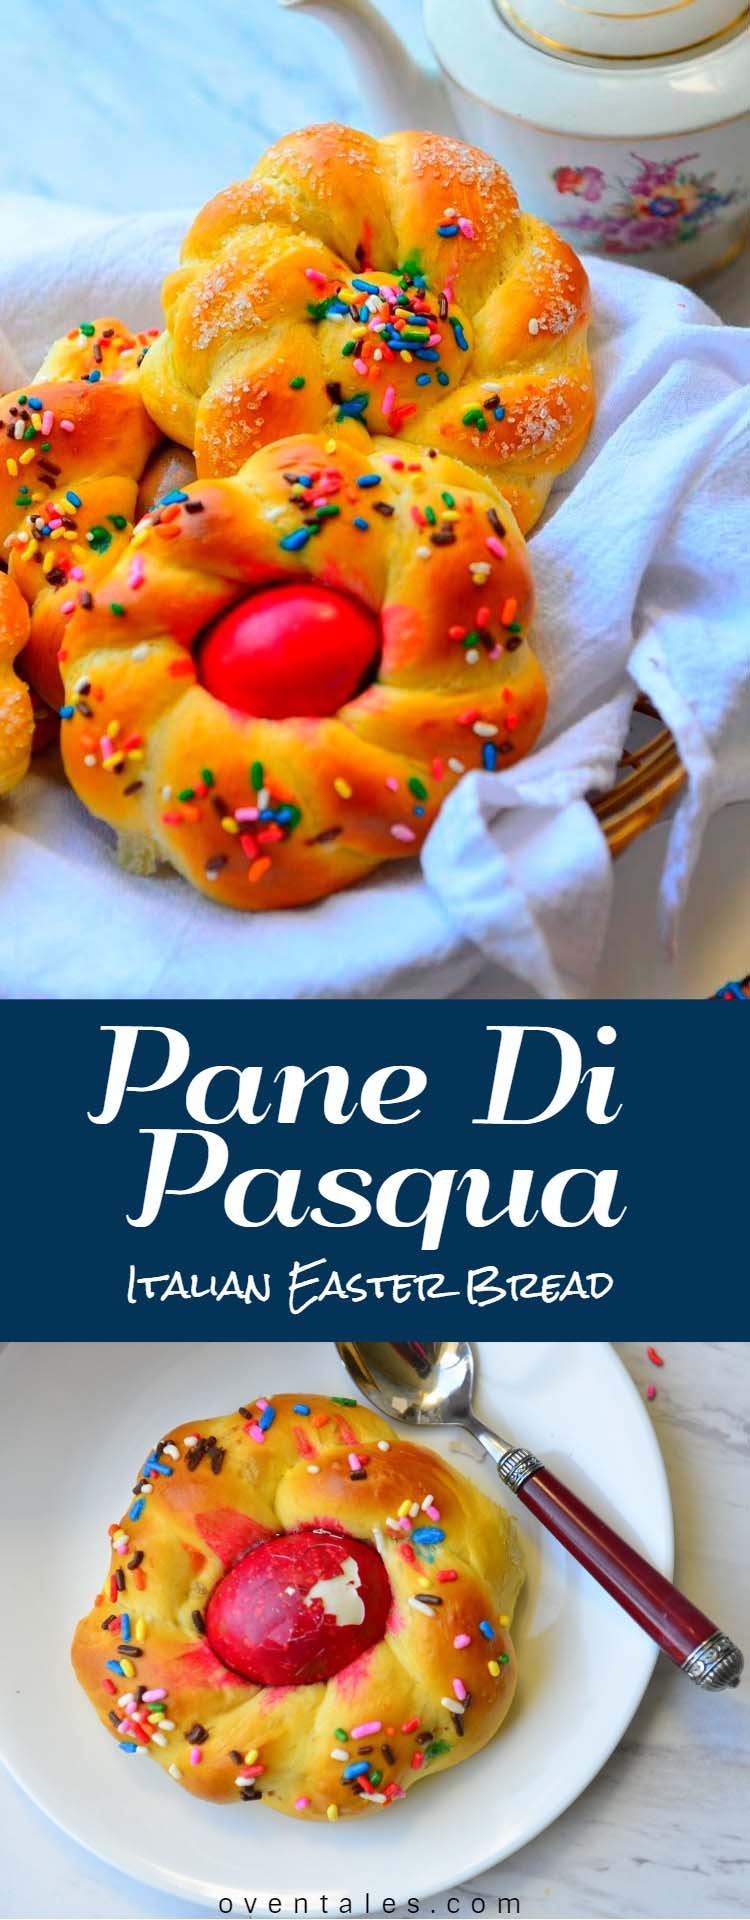 Italian Easter Bread | Pane Di Pasqua | OVENTales